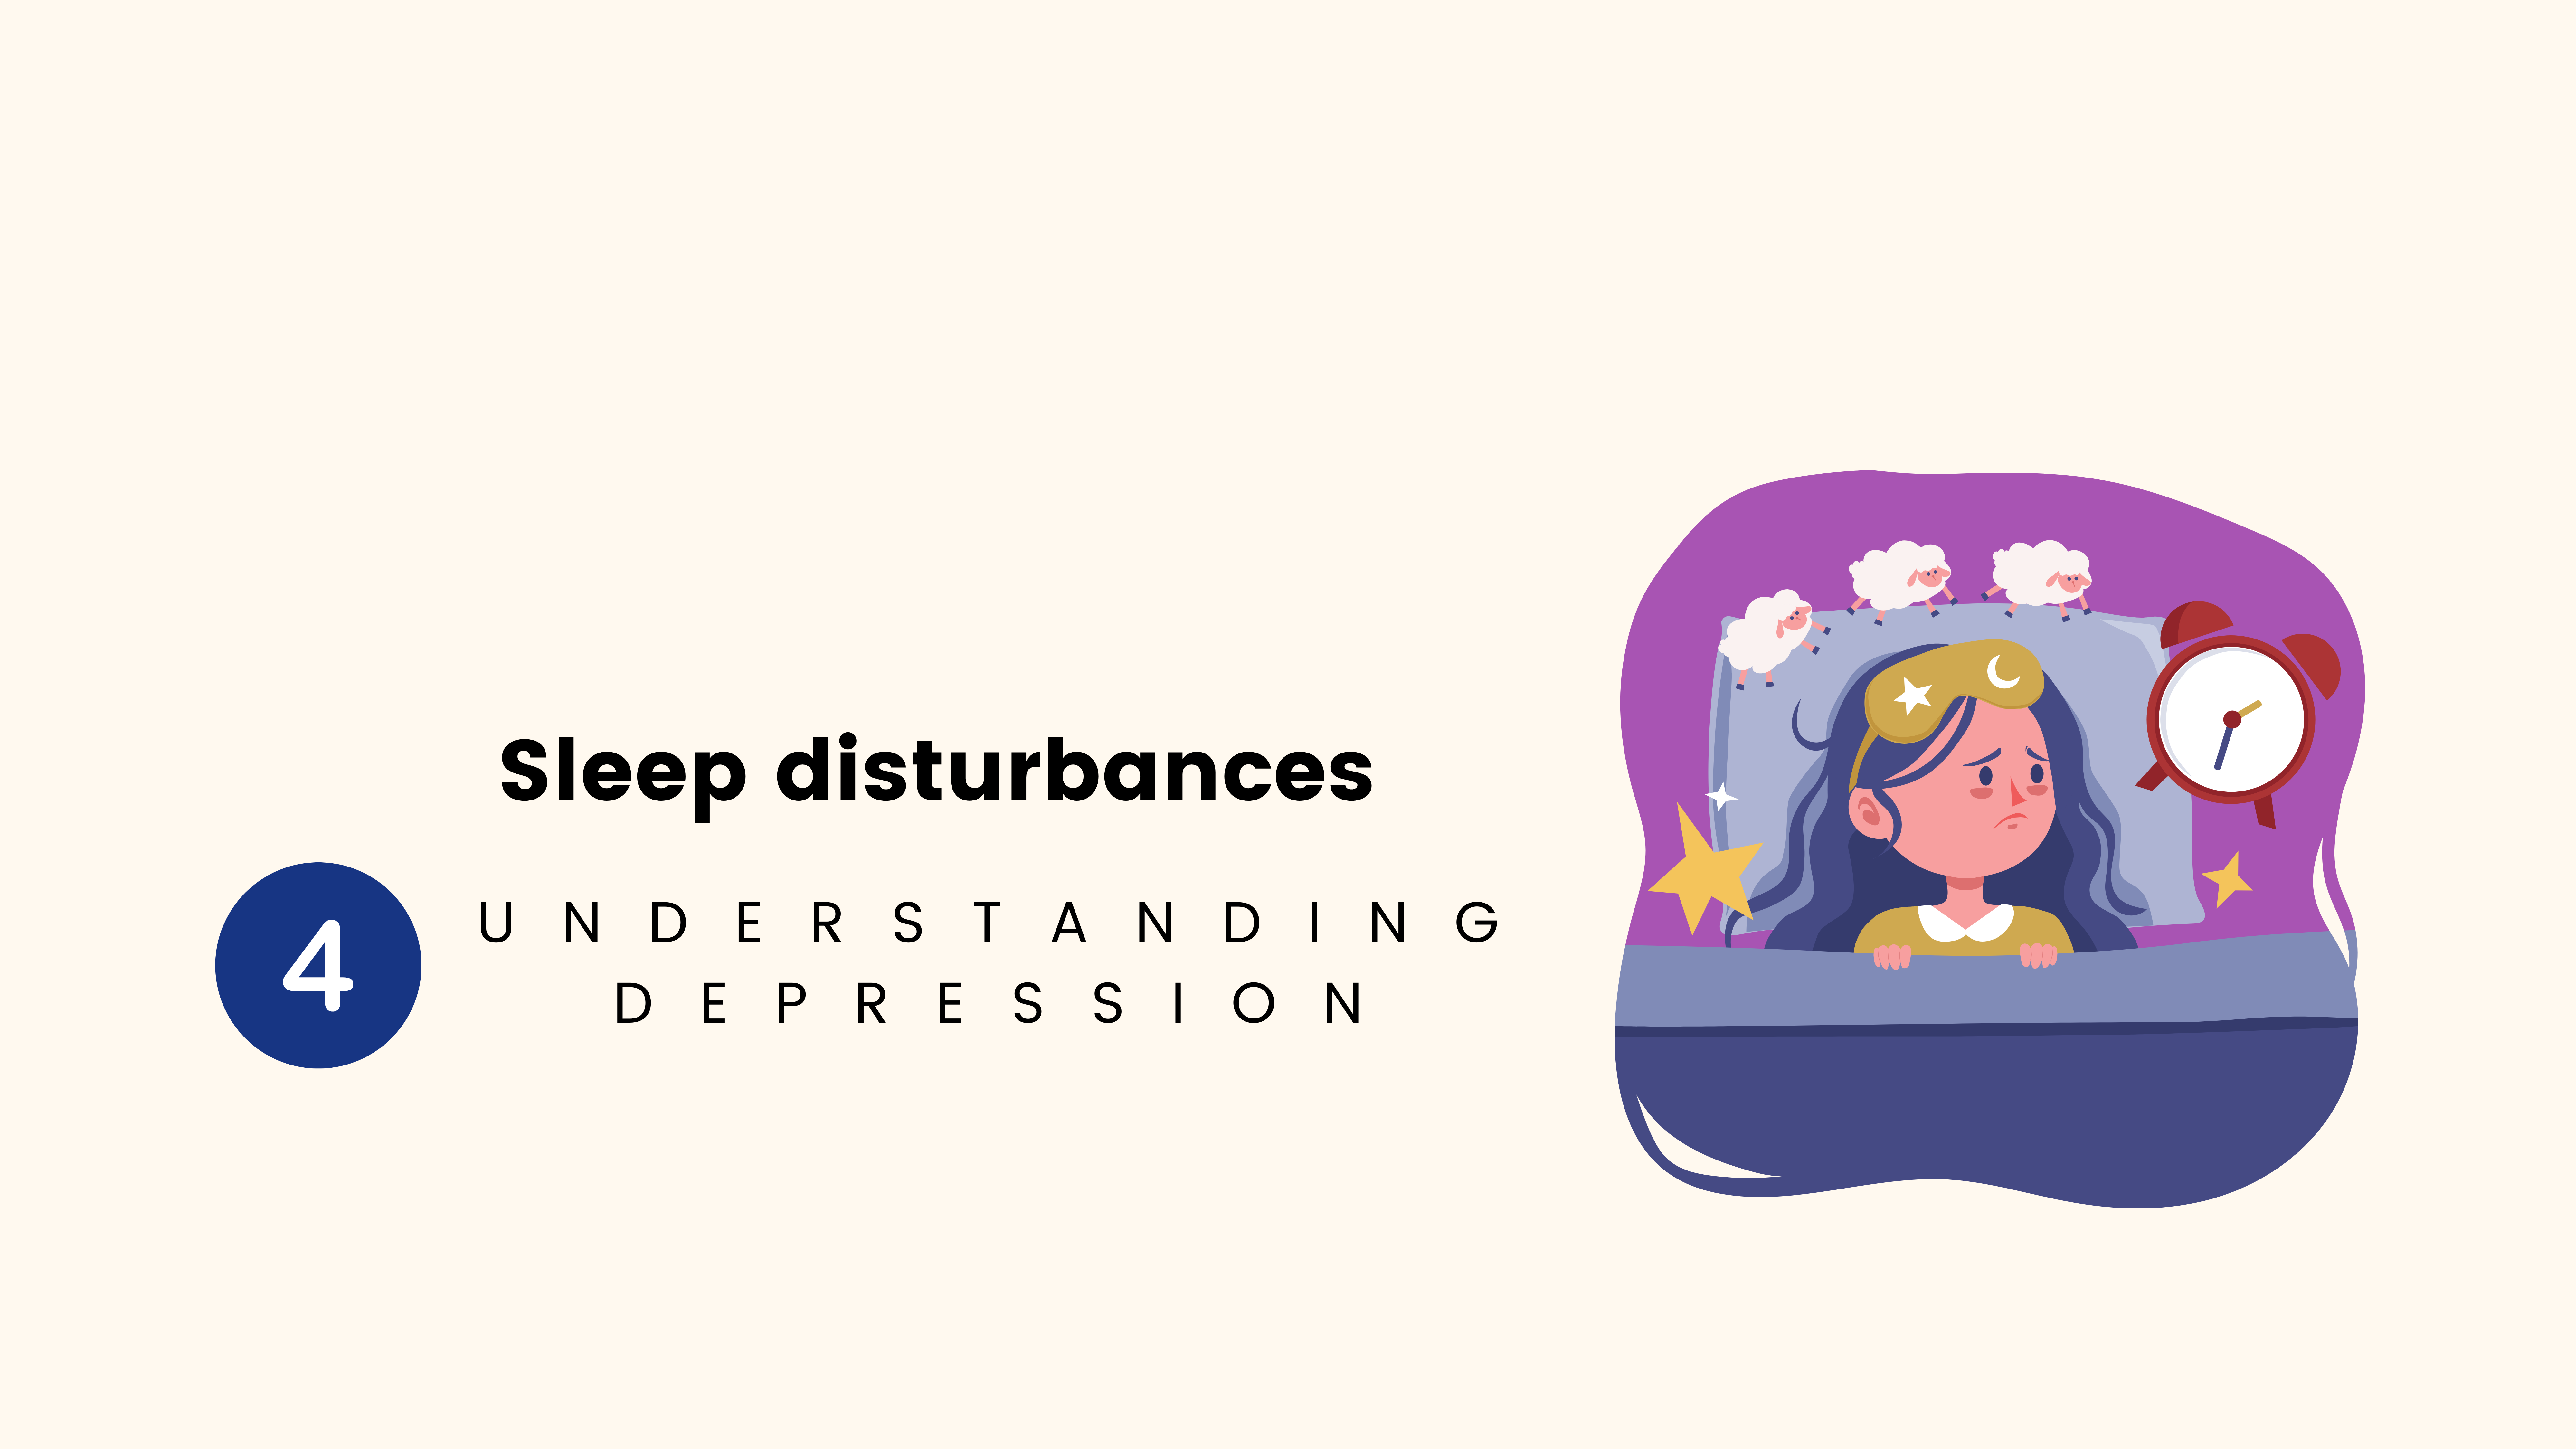 Image showing sleep disturbances